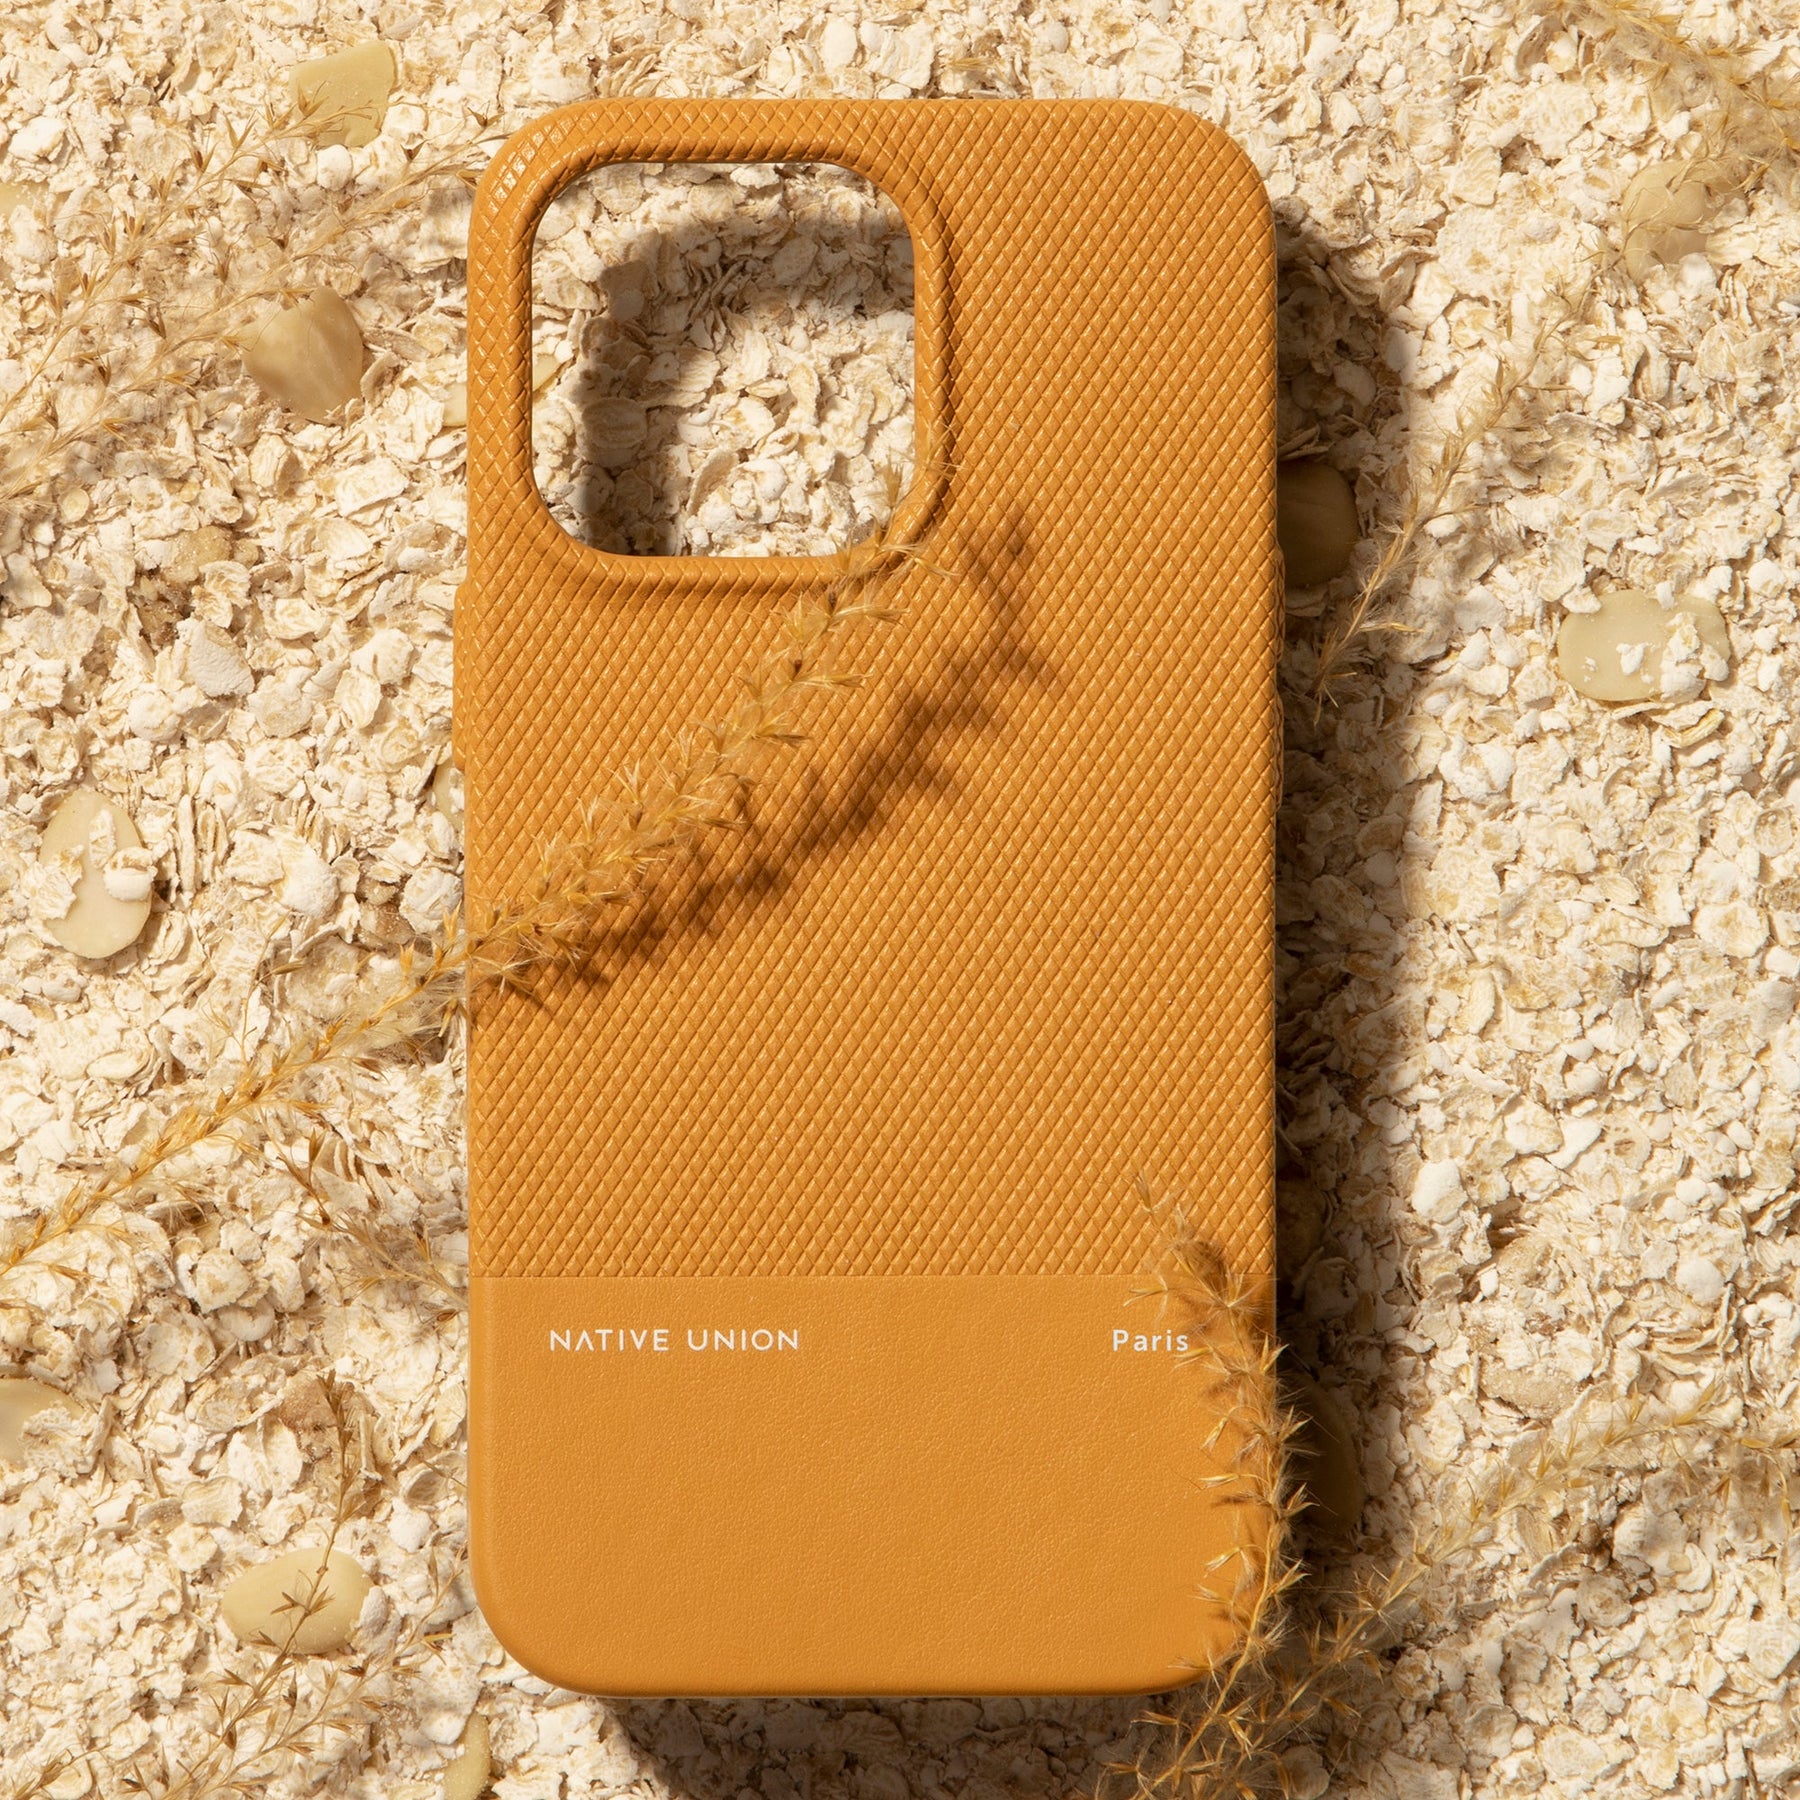 LOUIS VUITTON LV YELLOW PATERN ICON LOGO iPhone 14 Pro Case Cover